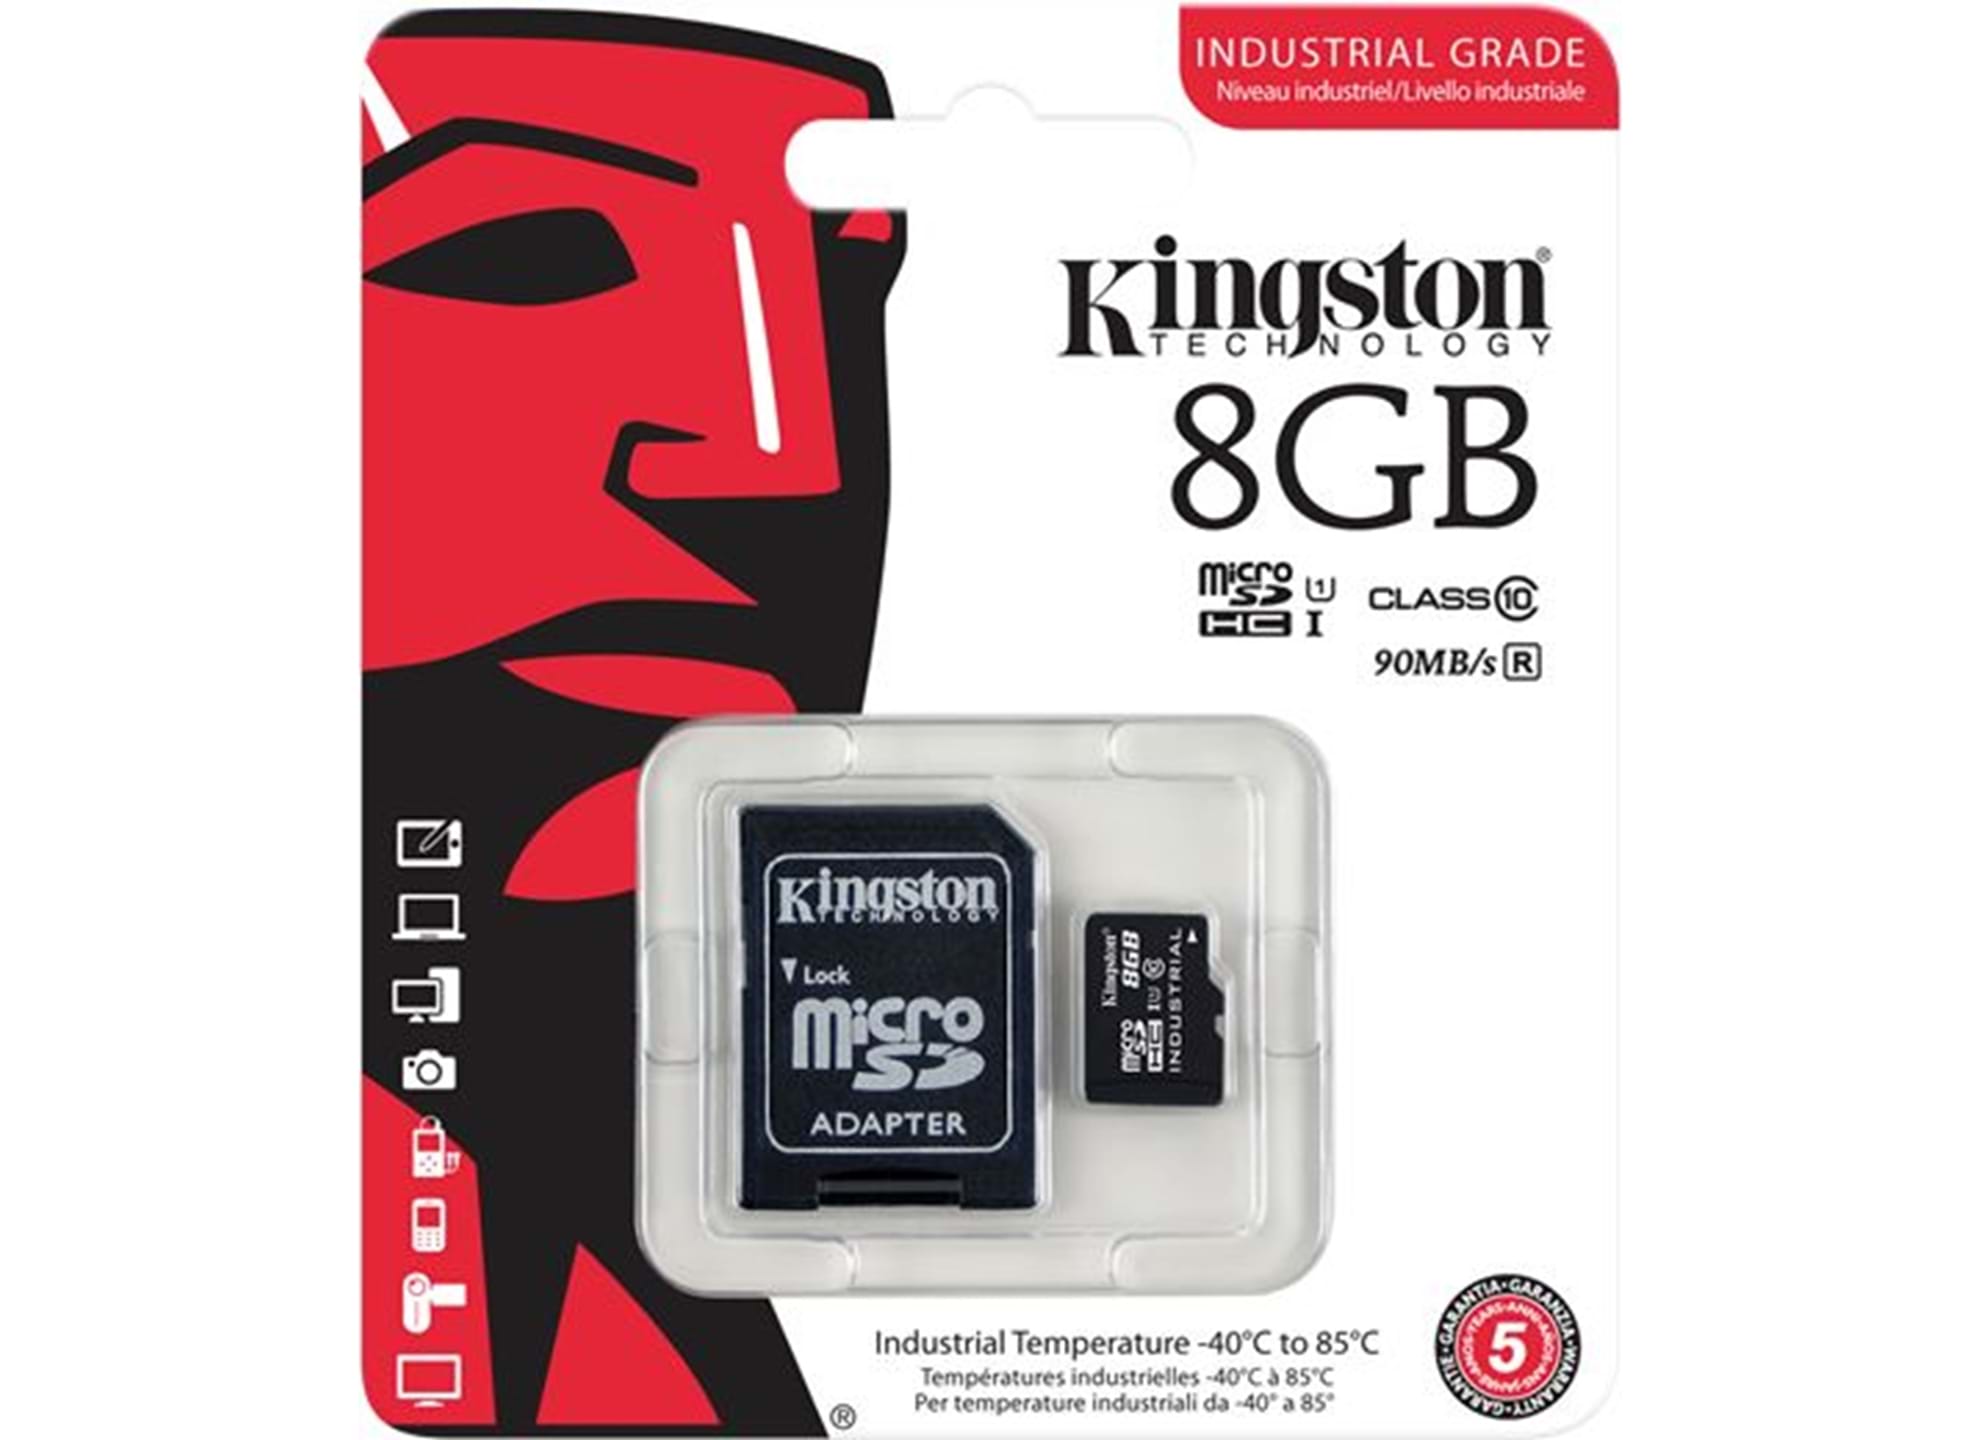 KING-2053 SD/MicroSDHC 8GB